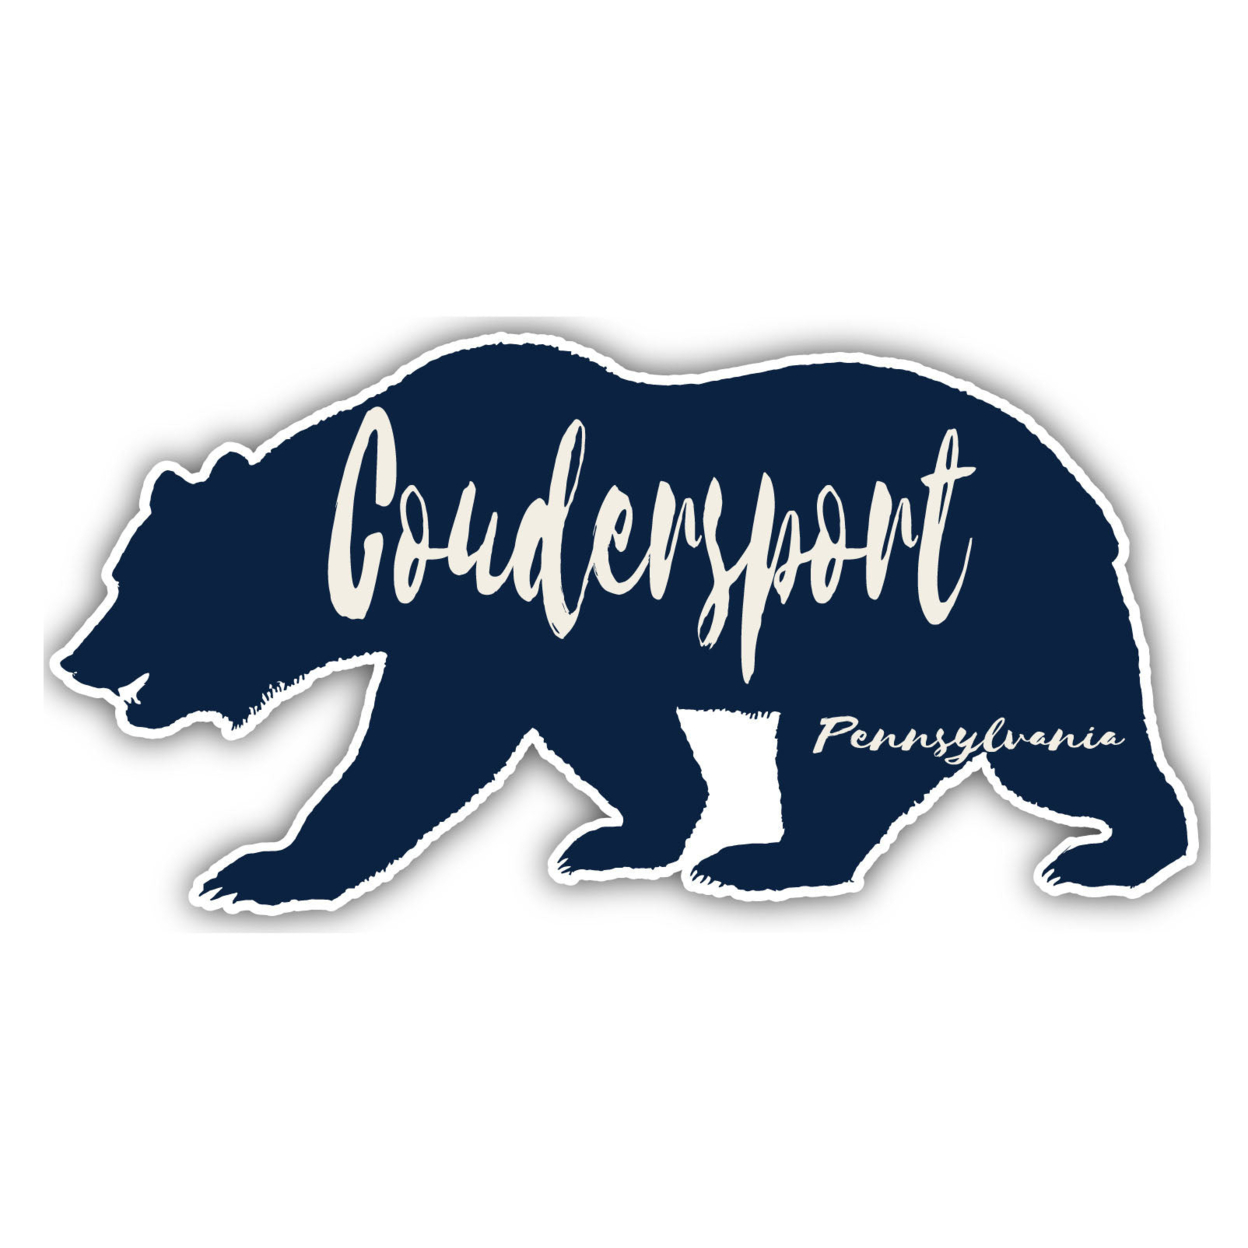 Coudersport Pennsylvania Souvenir Decorative Stickers (Choose Theme And Size) - Single Unit, 4-Inch, Adventures Awaits